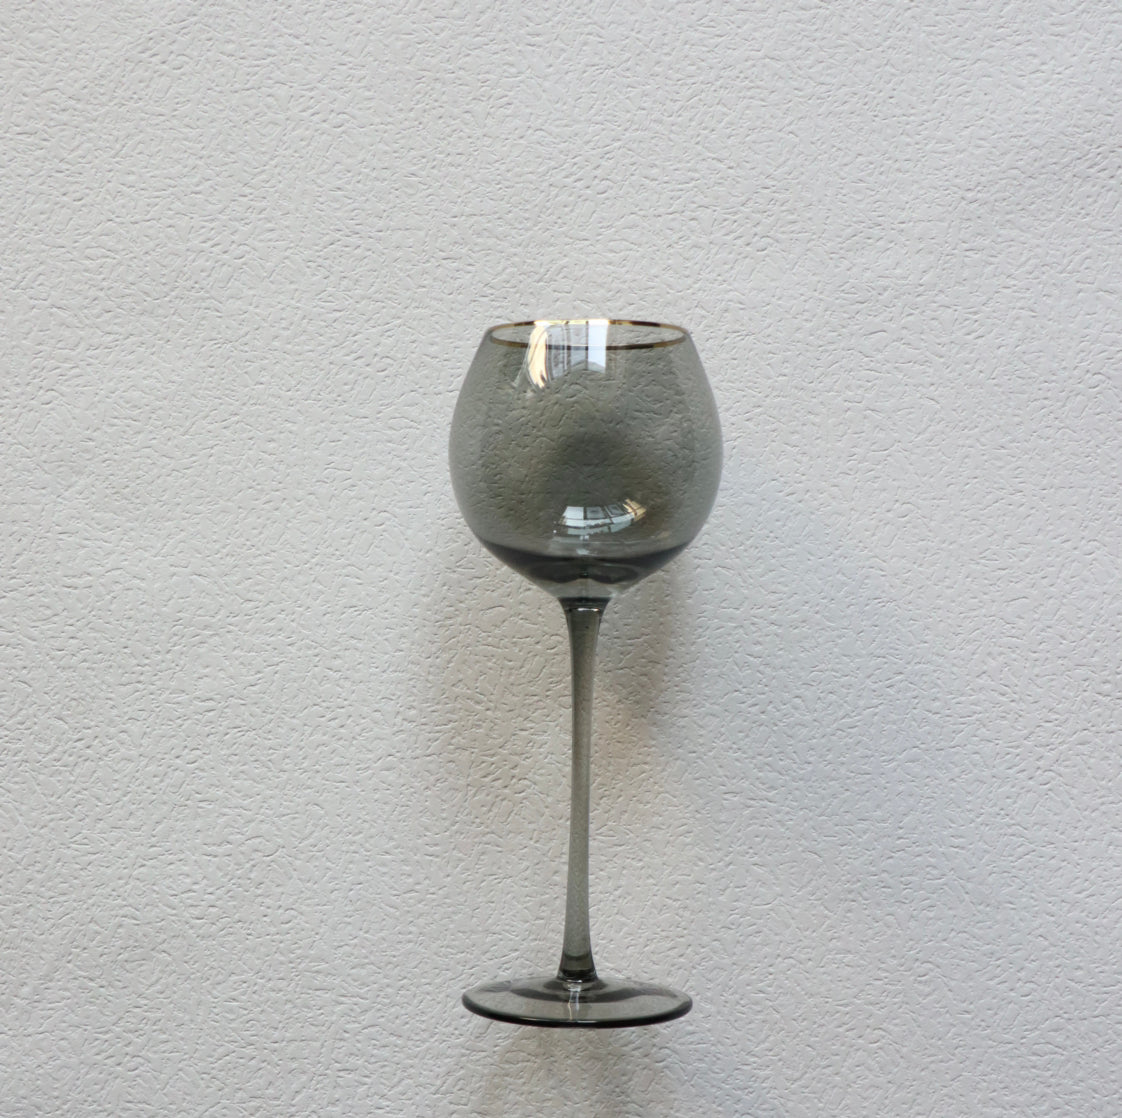 Vikko Decor Platinum Gold Rimed Ball Wine Glass, 17 oz, Set Of 6 - Assorted Colors